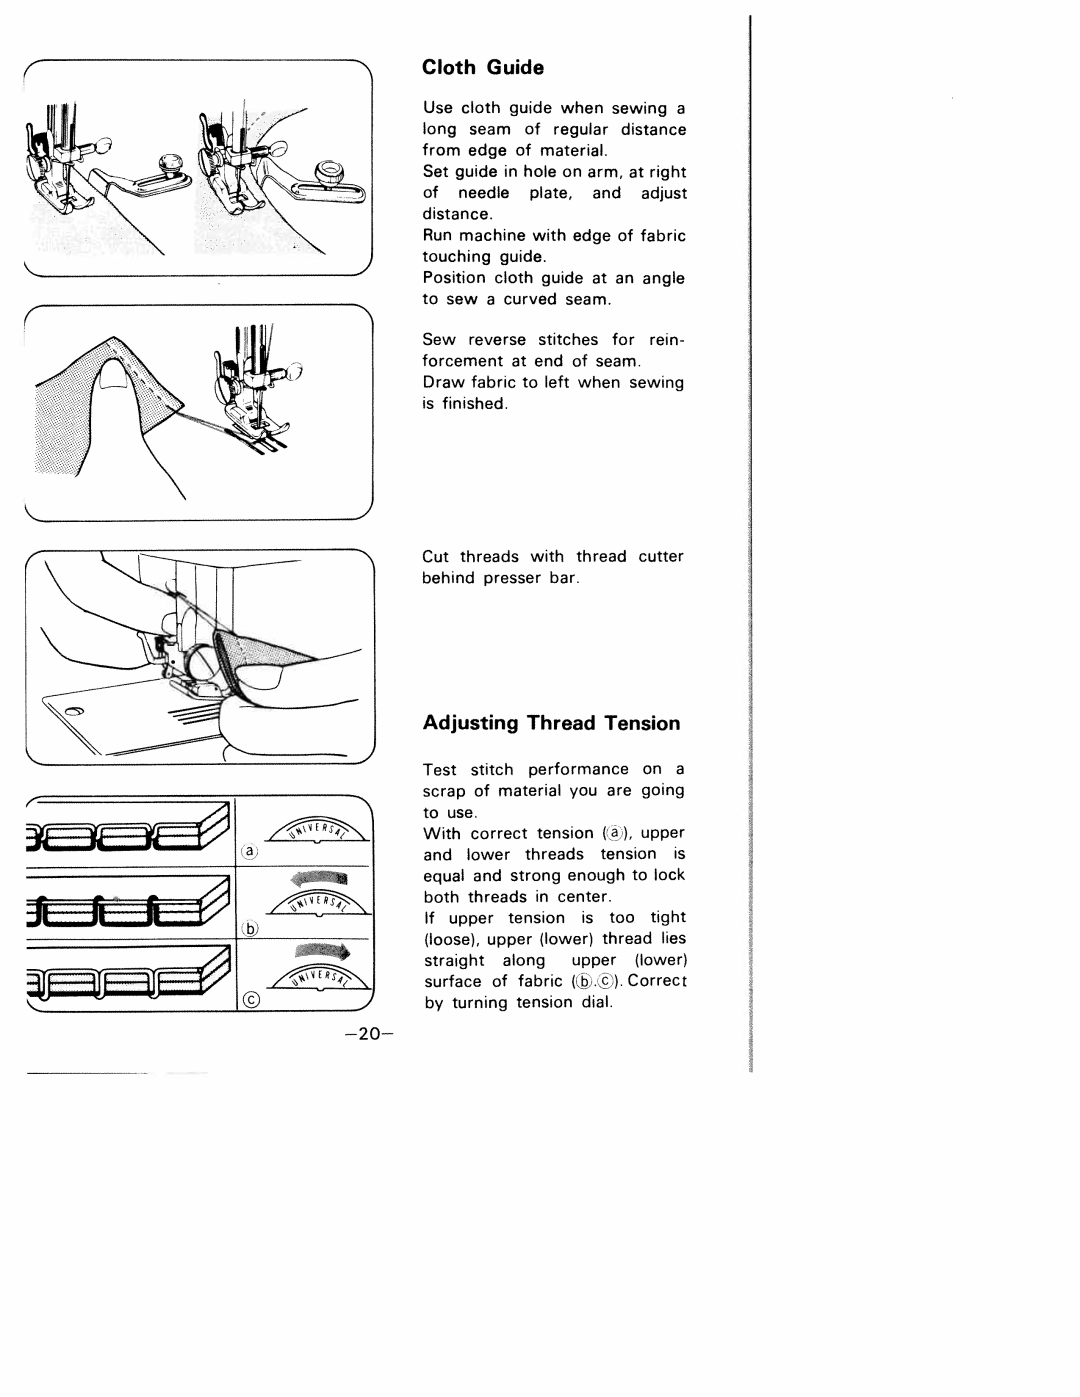 White 1927 manual ii L, Cloth, Adjusting Thread Tension 